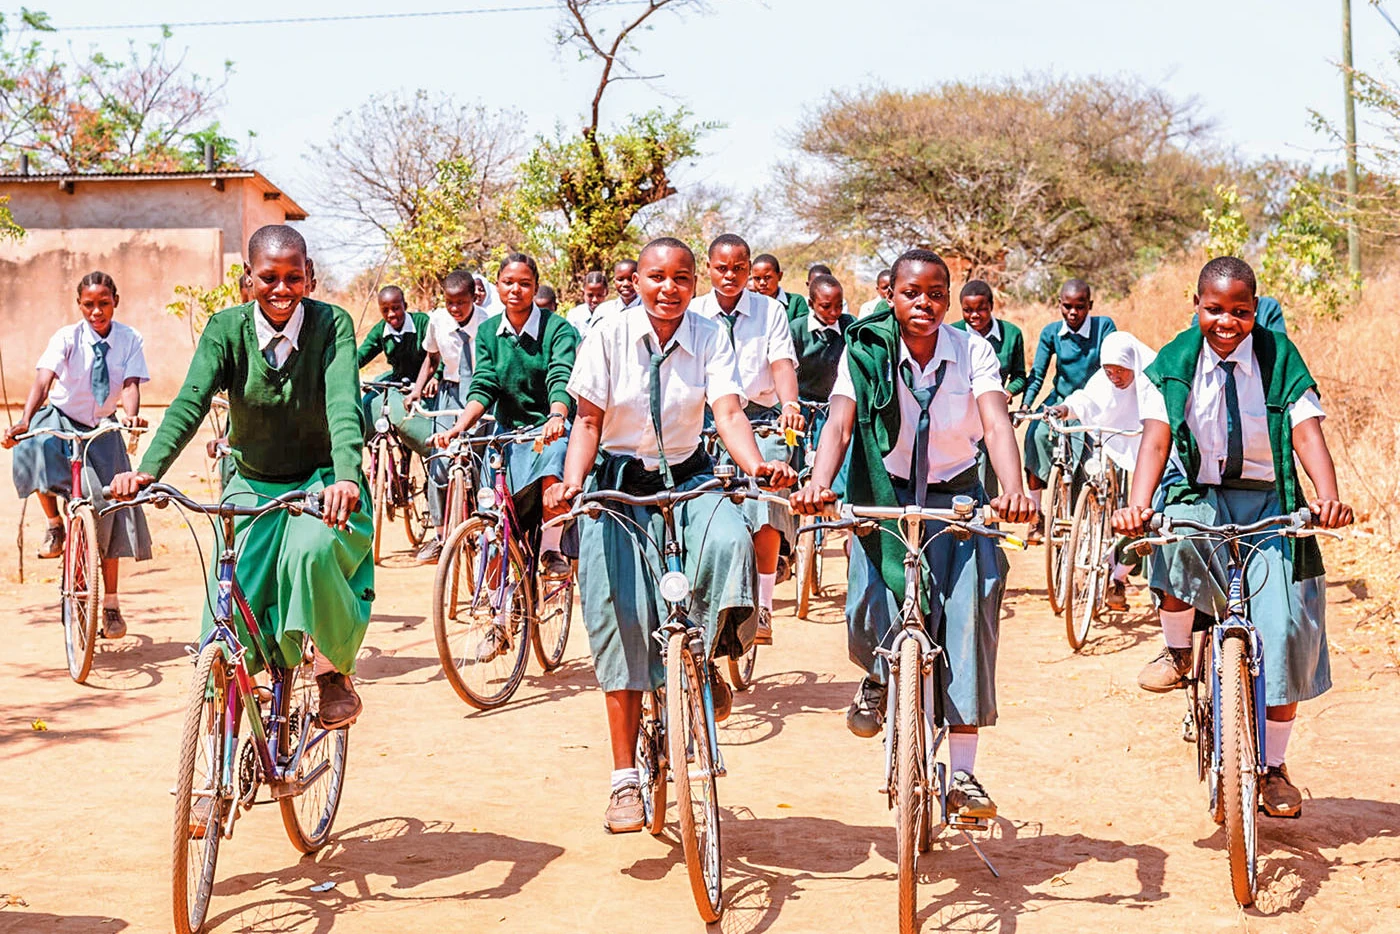 Mit dem Fahrrad rückt die Schule näher<br><span class="image-copyright">Chimwemwe Mkandawire</span>